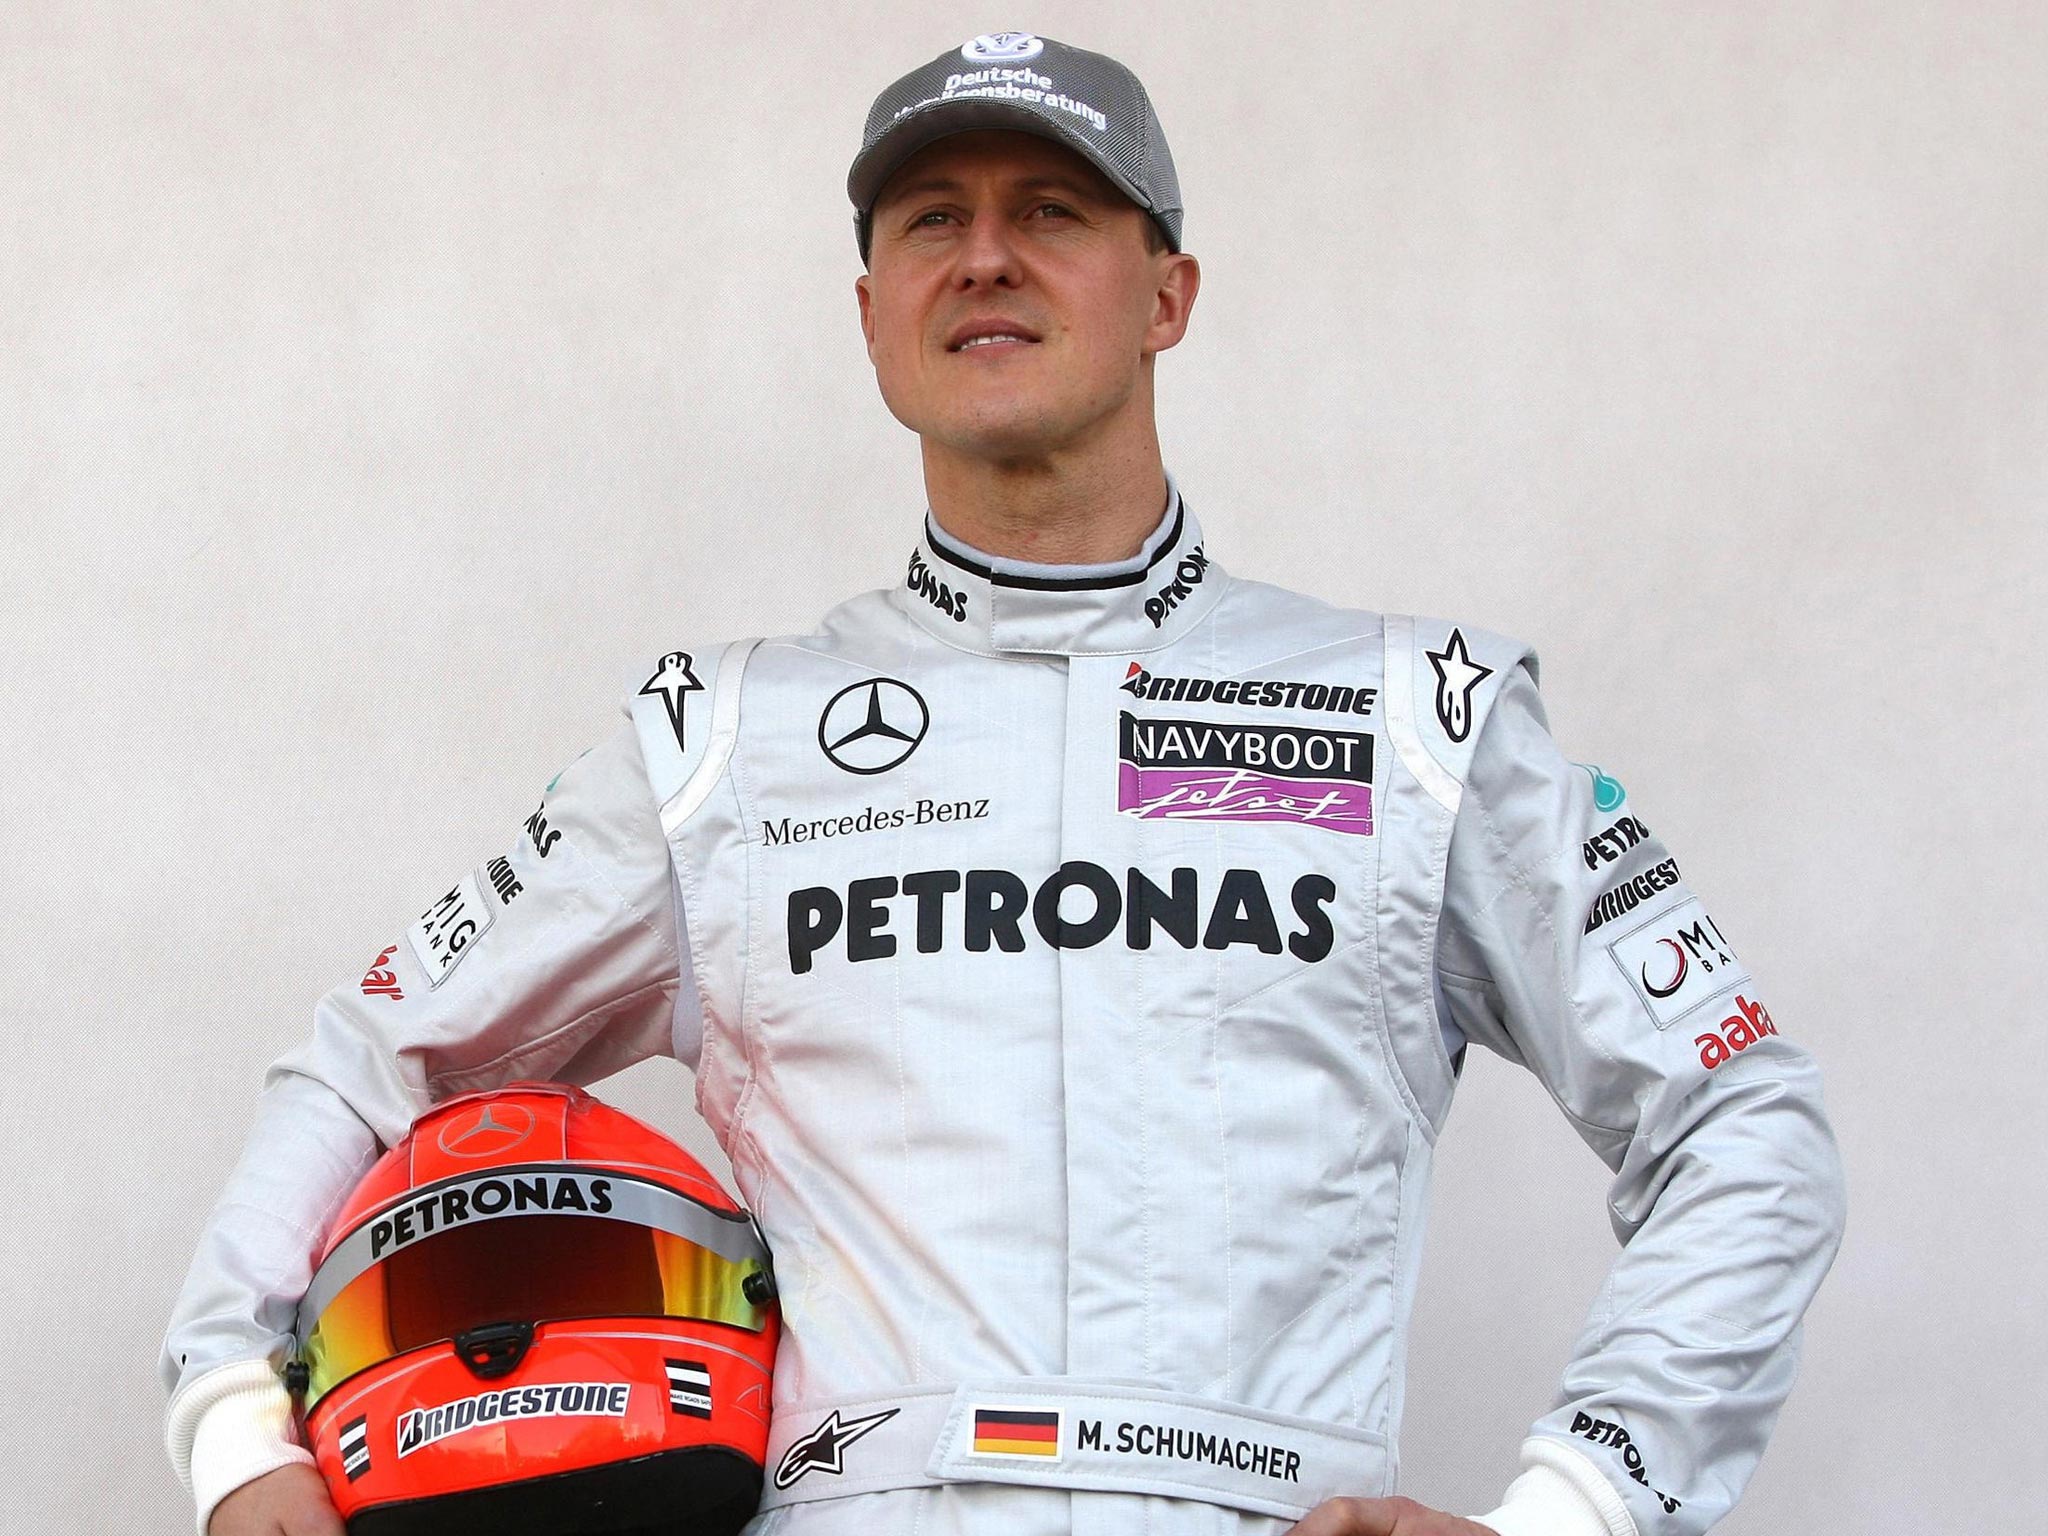 Michael Schumacher picture leaked after friend takes 'secret